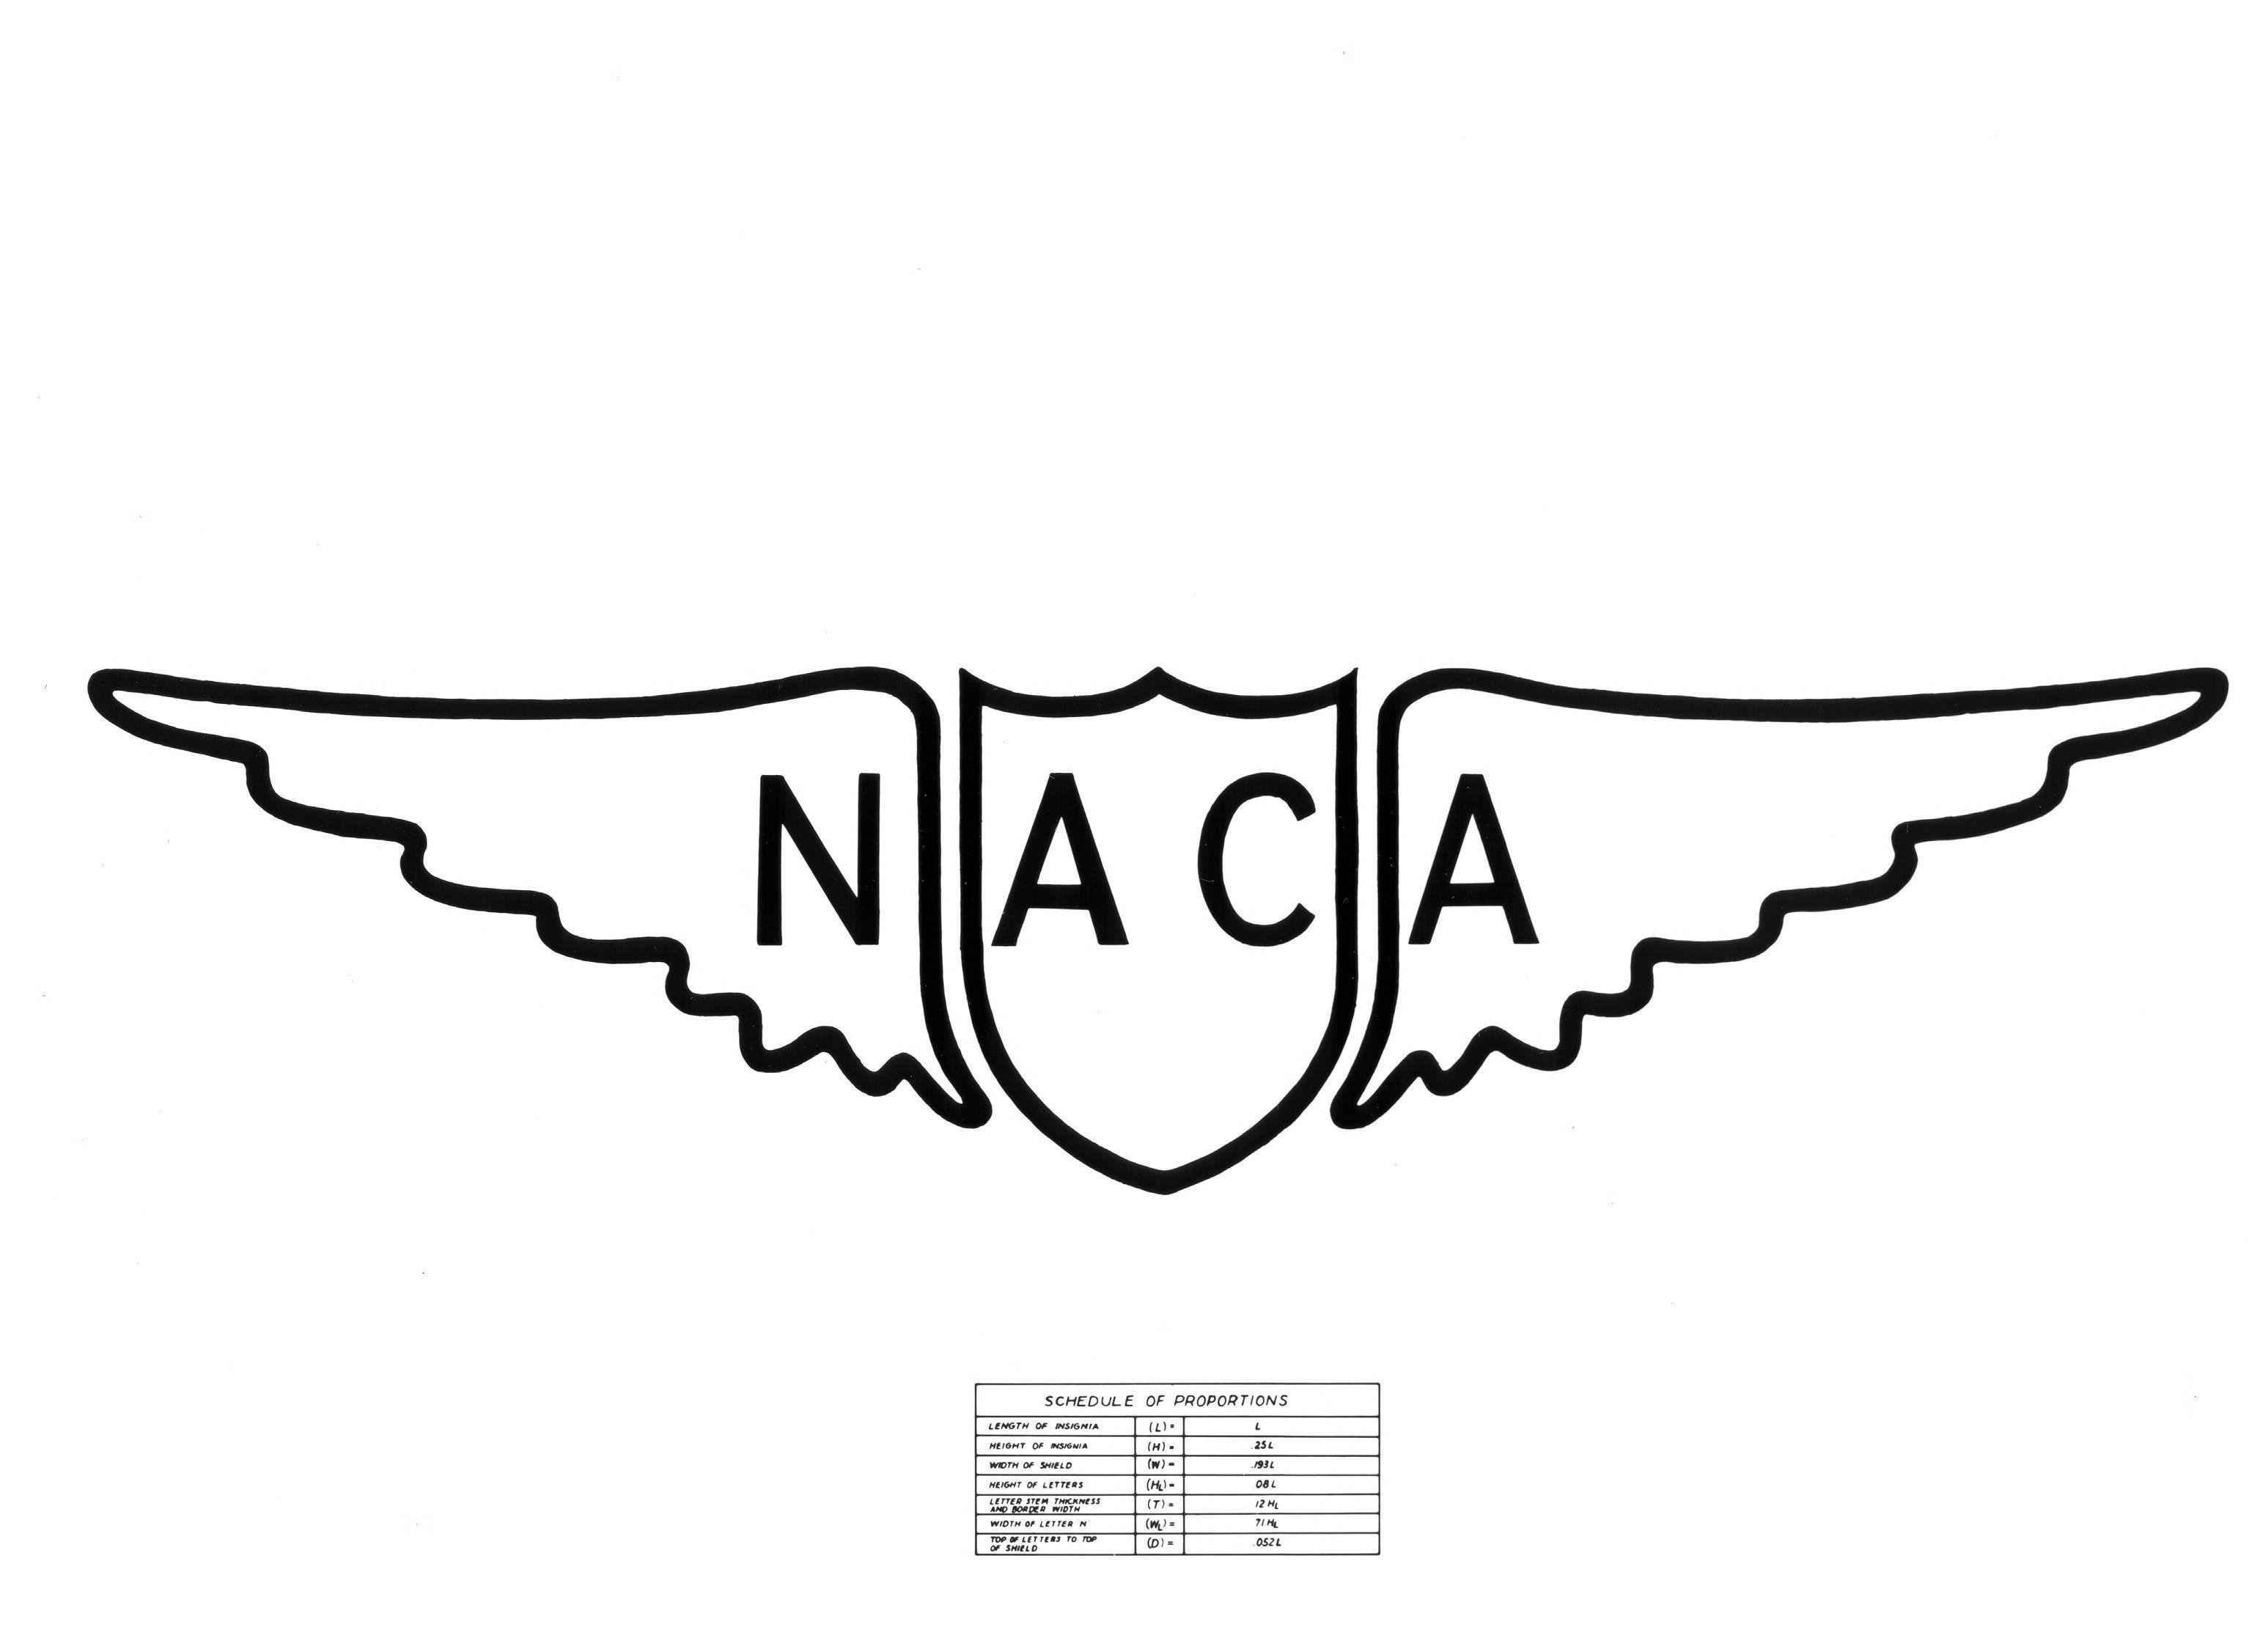 NACA NASA Logo - Insignia/Heraldry of the Space Race